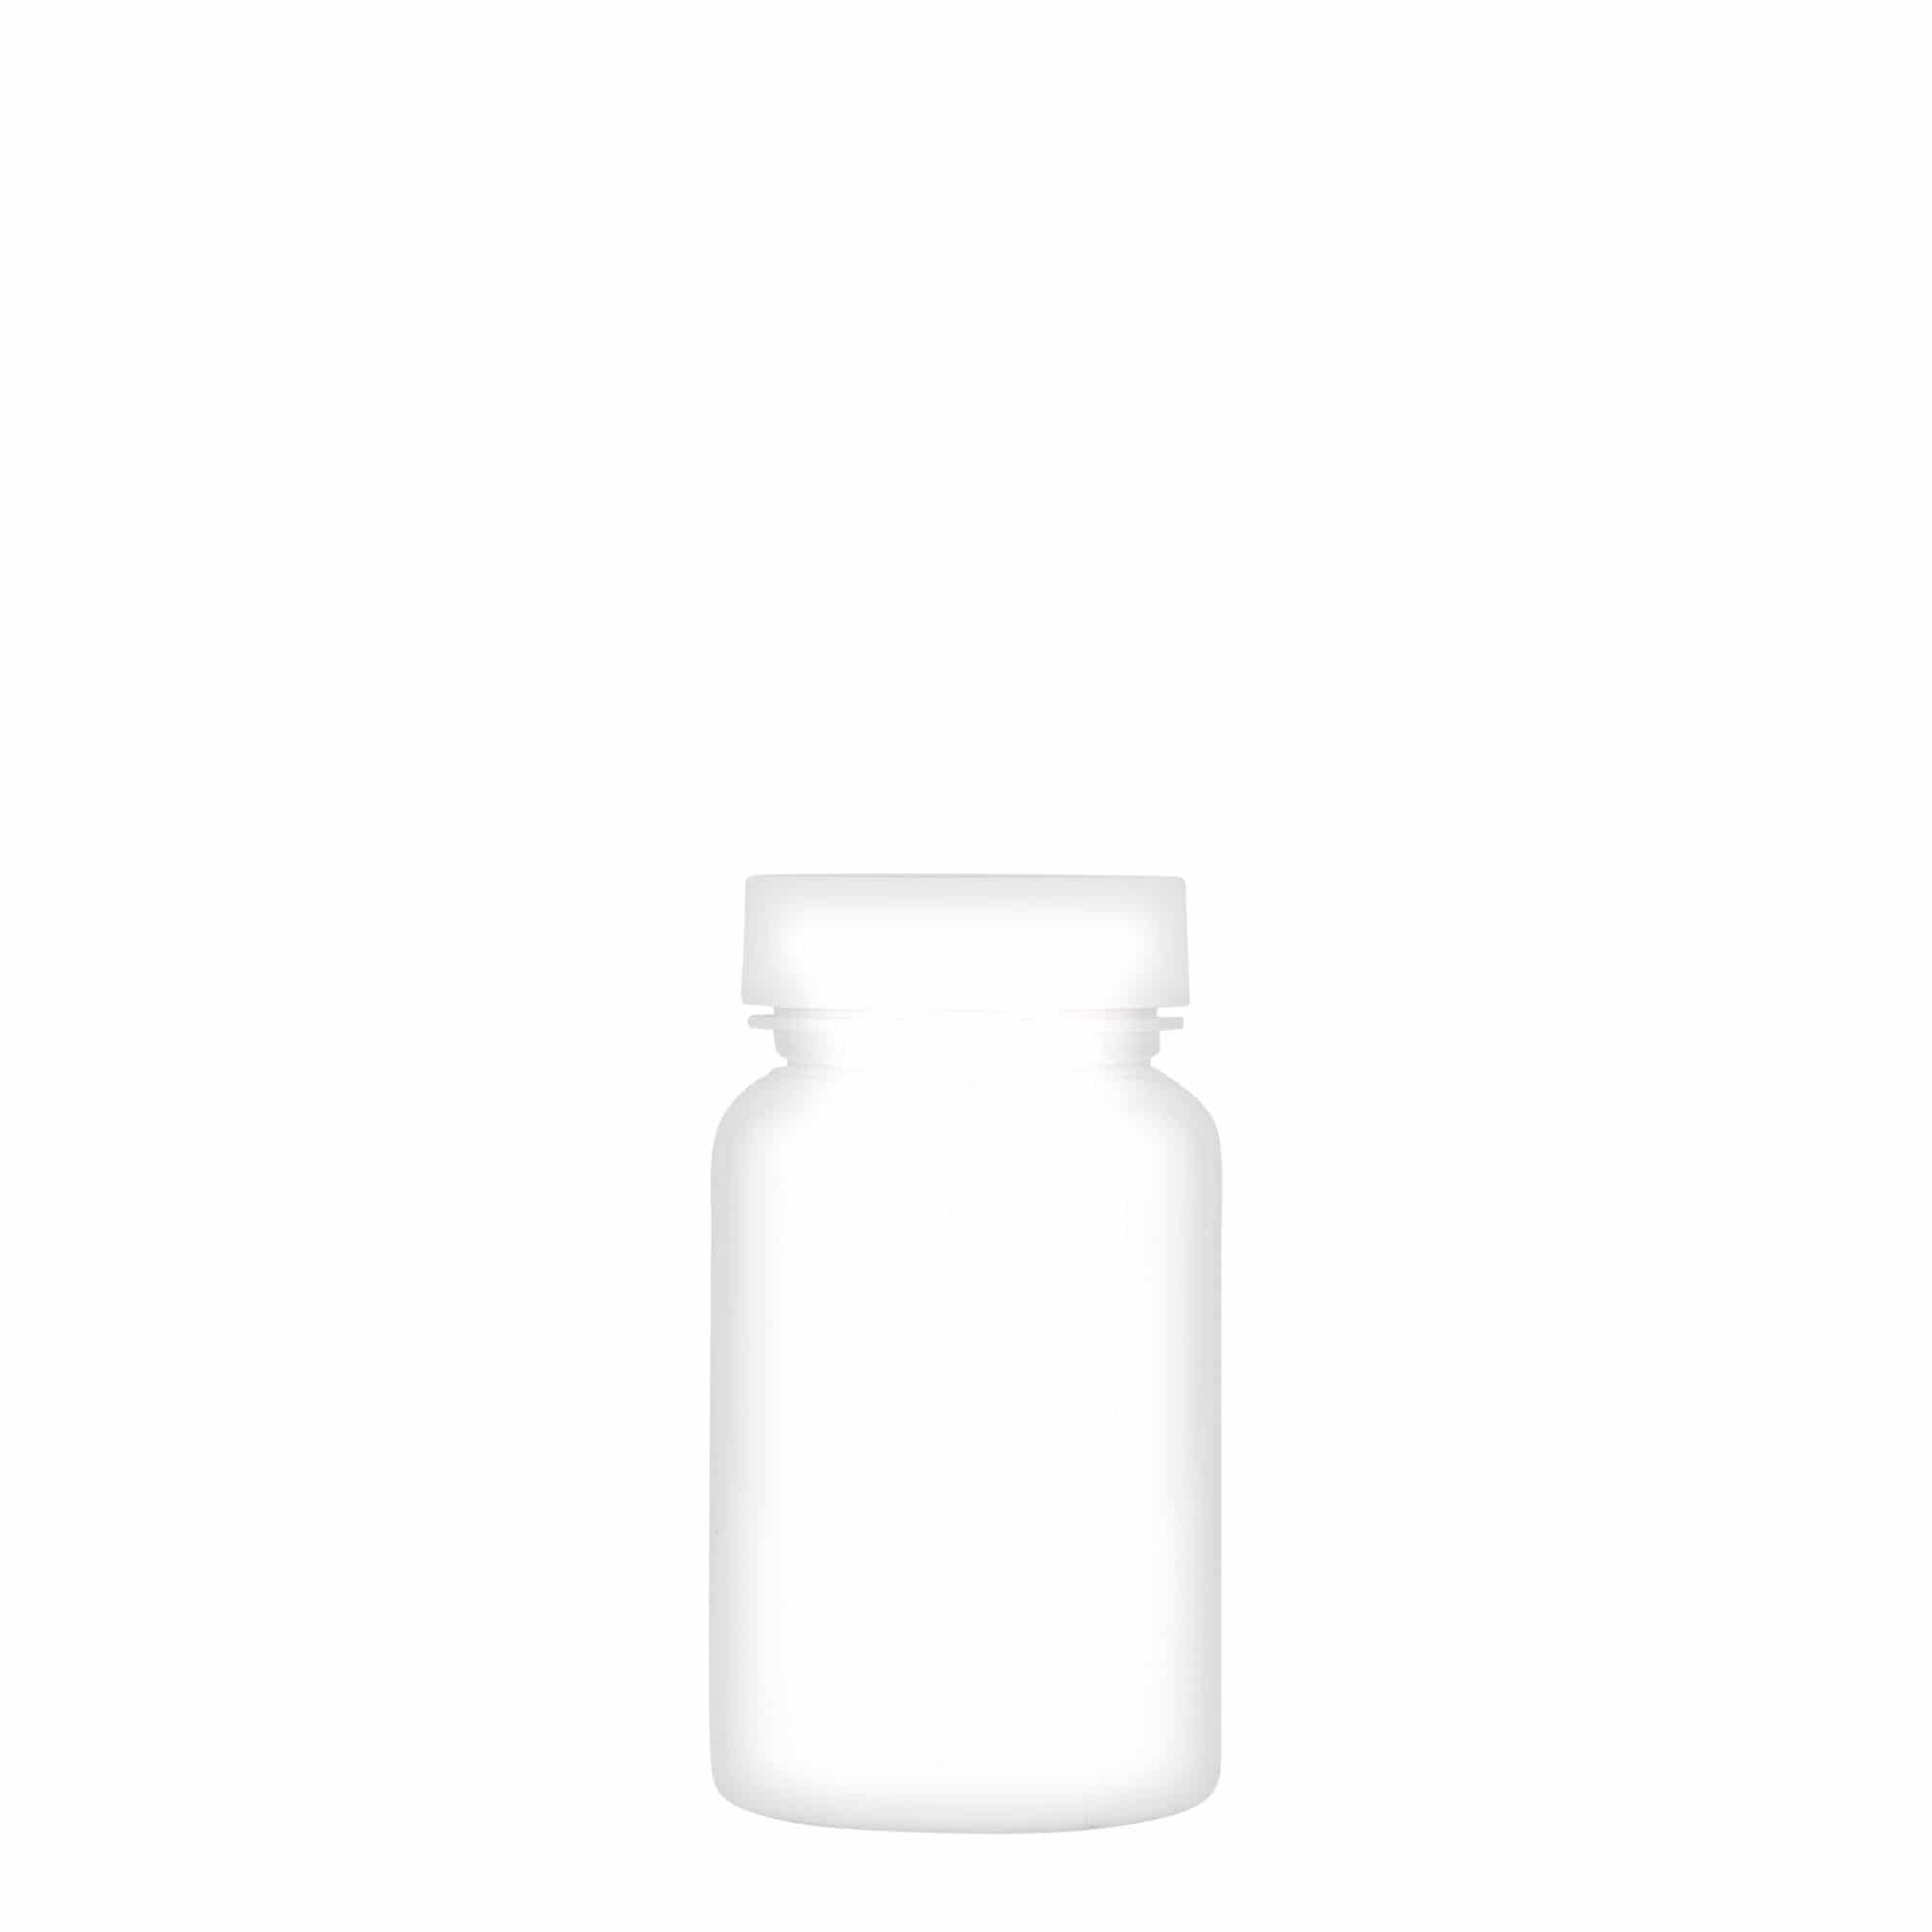 PET dóza 75 ml, plast, bílá, uzávěr: GPI 38/400